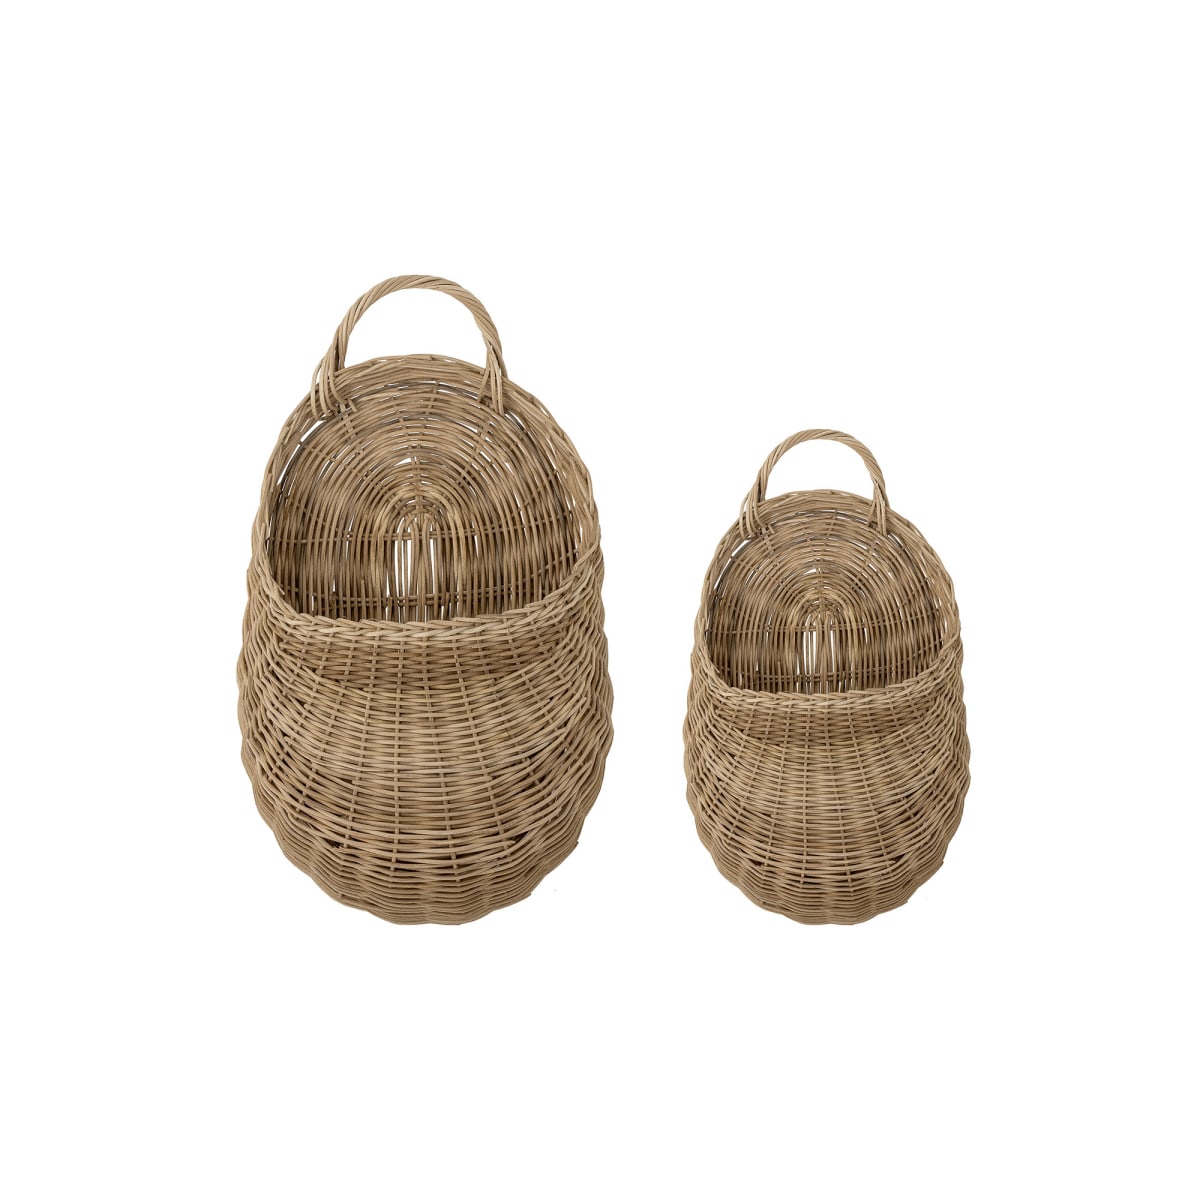 Chloe - 2 wicker baskets 40 and 55 cm